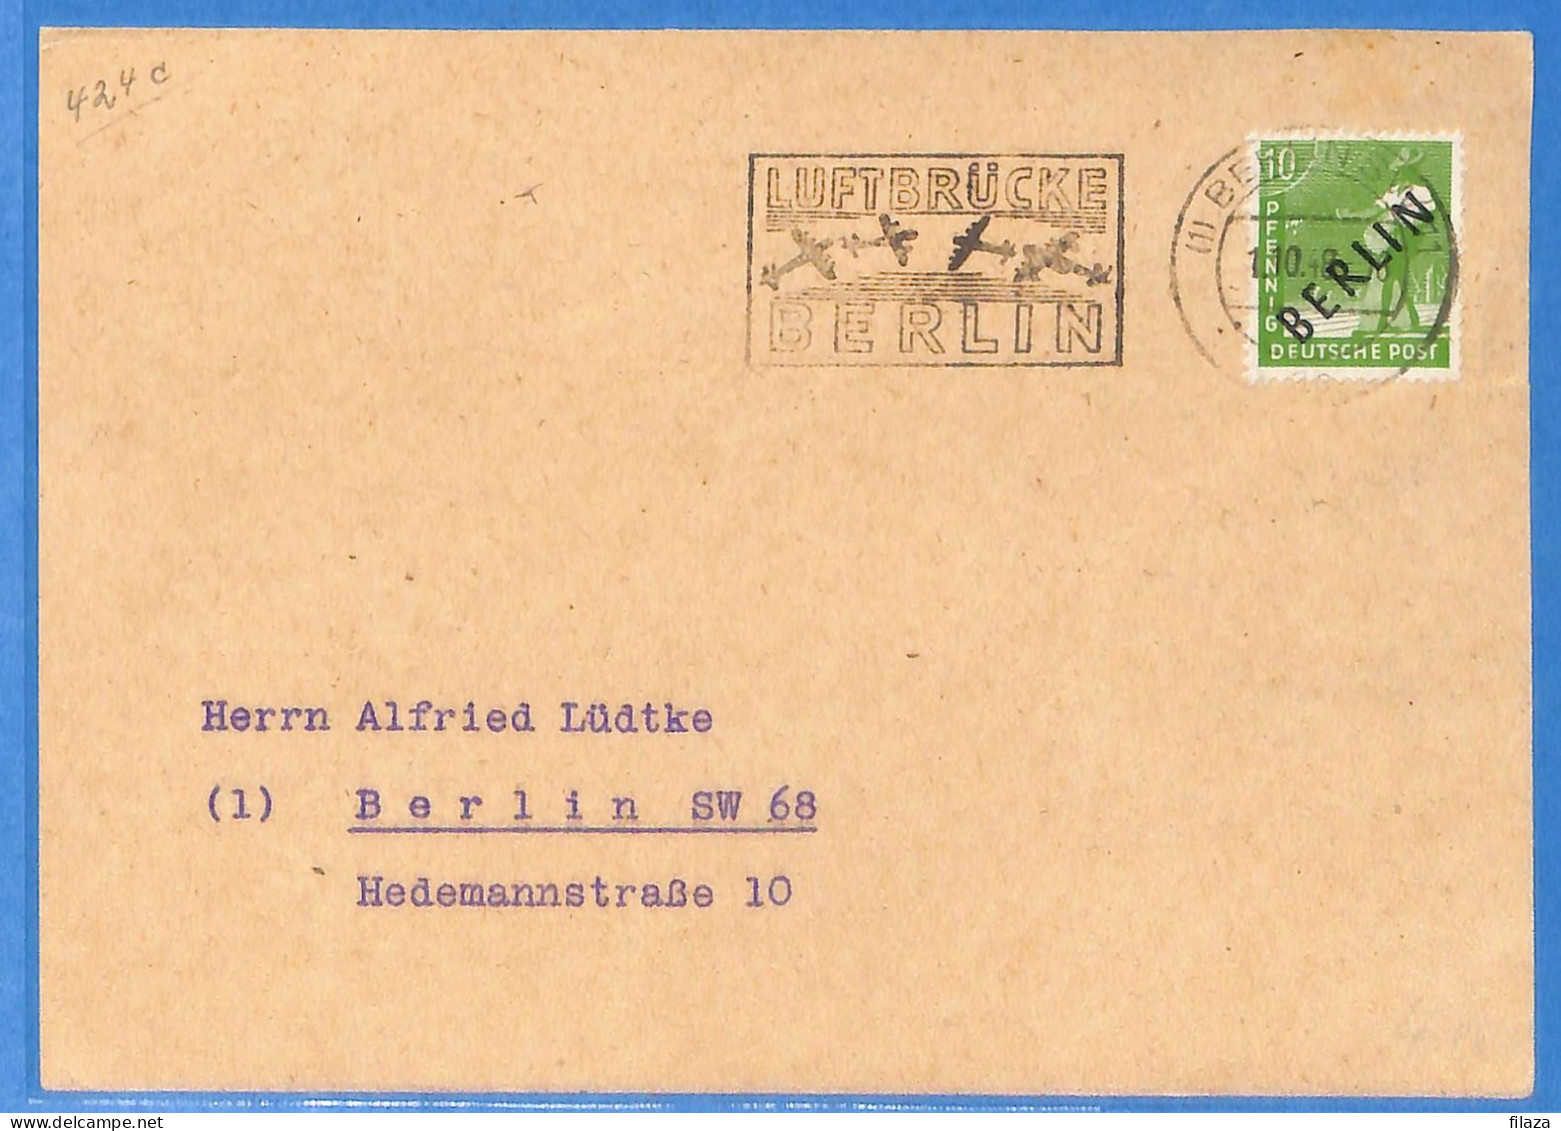 Berlin West 1948 - Carte Postale De Berlin - G33040 - Lettres & Documents